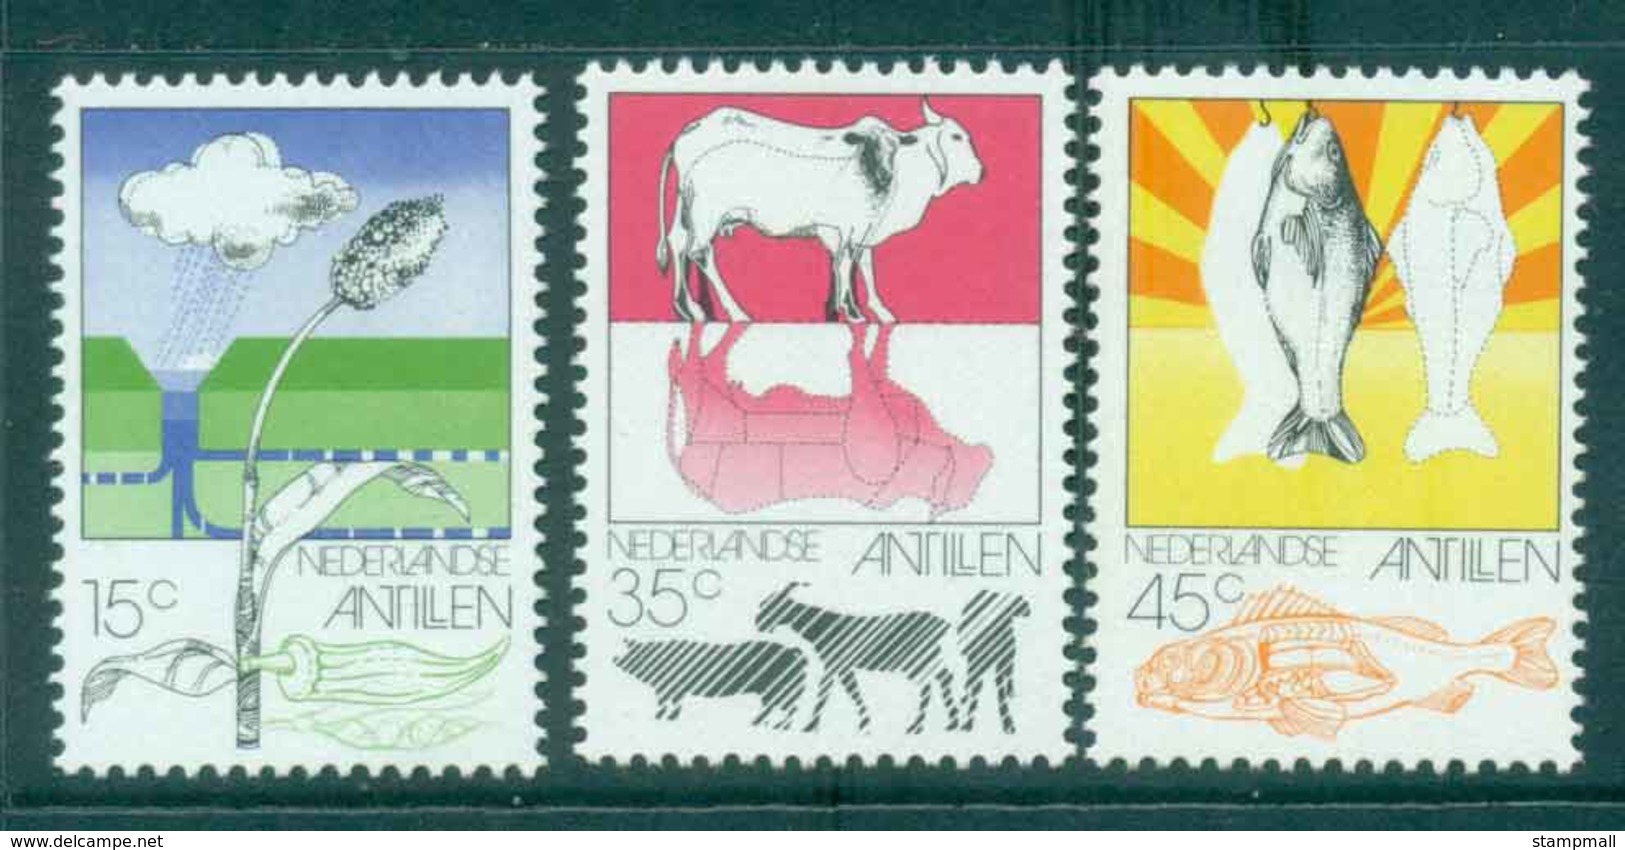 Netherlands Antilles 1976 Agriculture MUH Lot47140 - West Indies